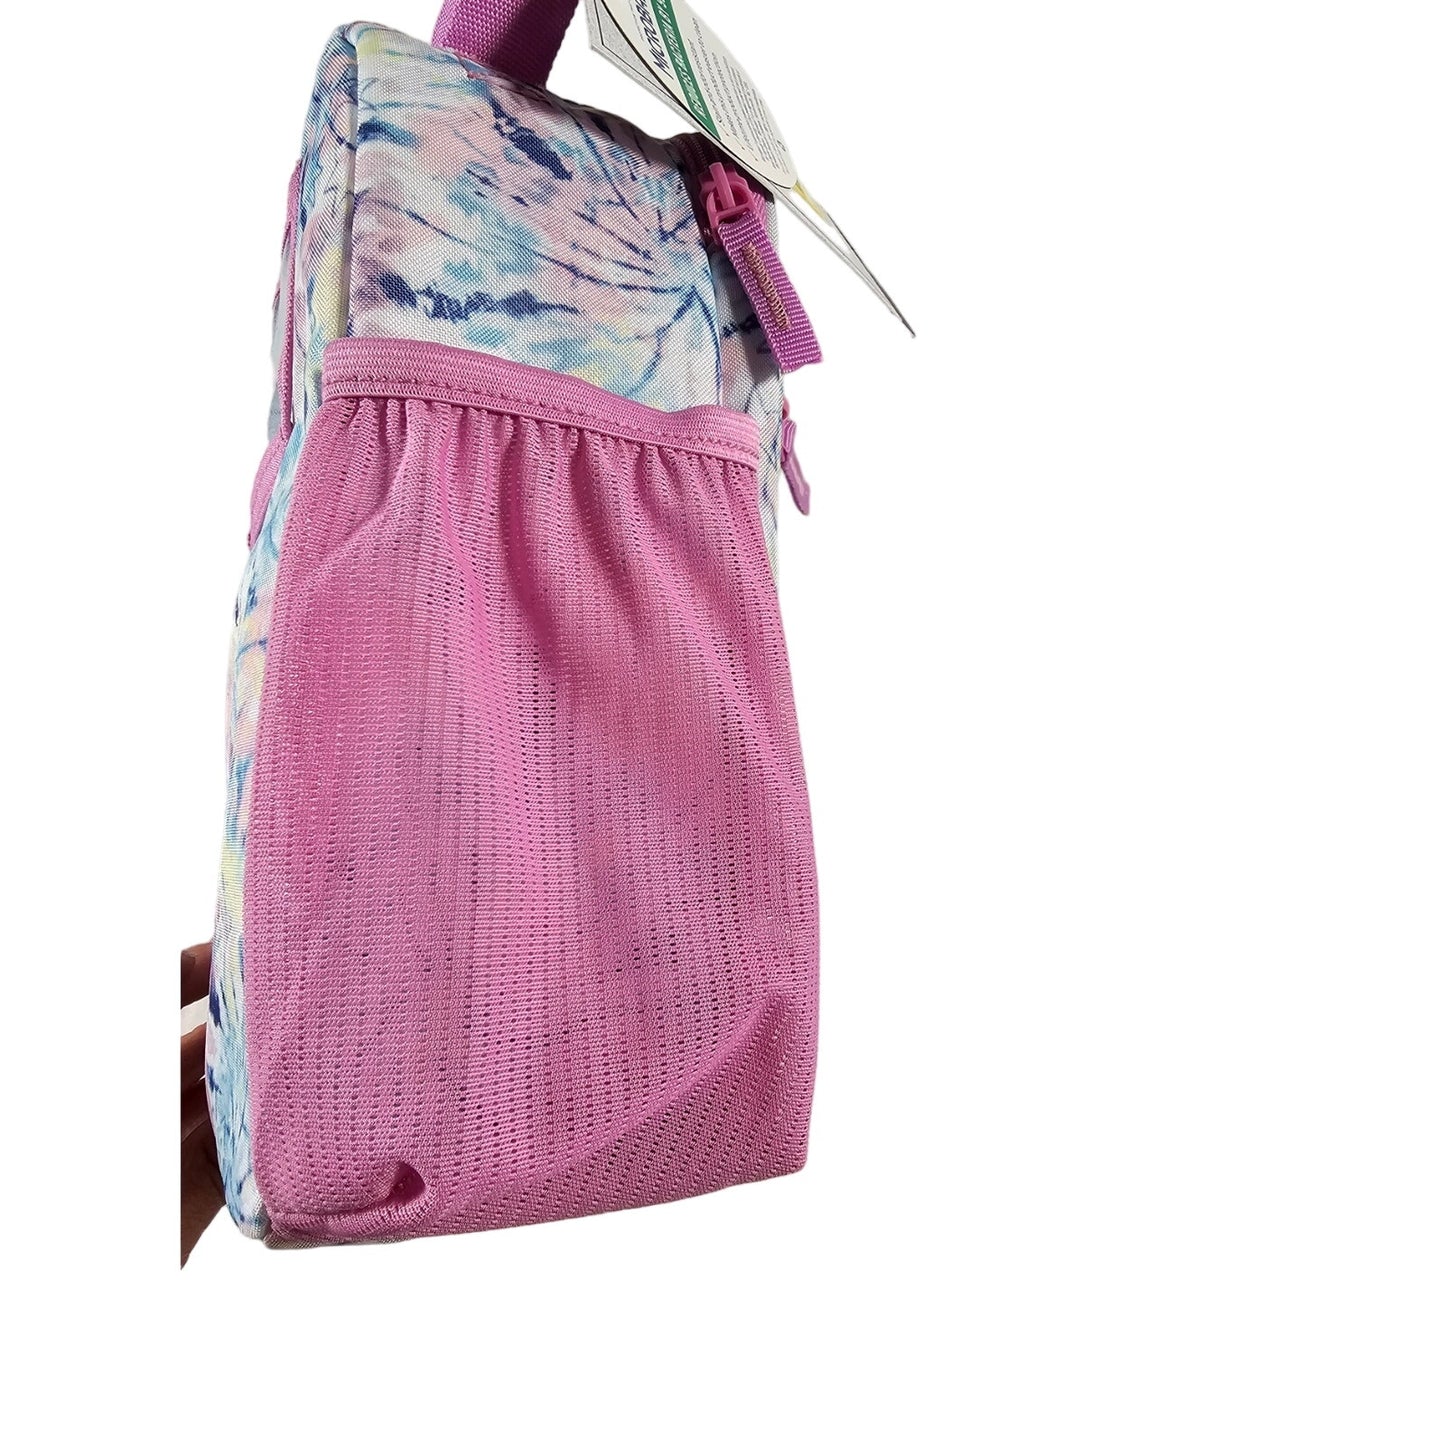 Fulton Bag Co. Upright Lunch Bag - Starstruck Tie Dye